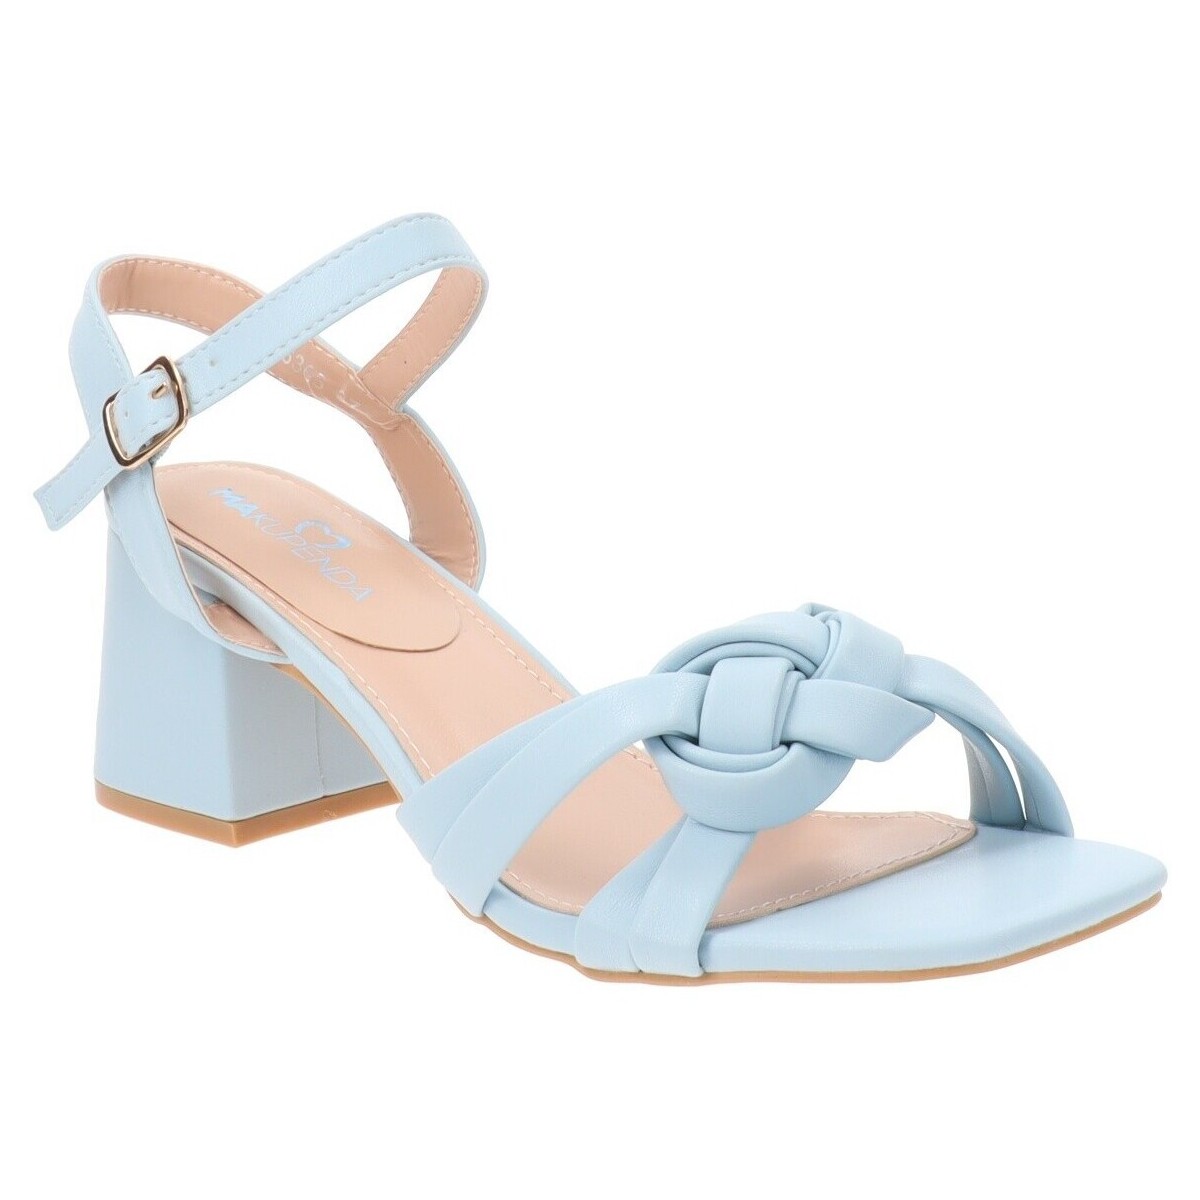 Schoenen Dames Sandalen / Open schoenen Makupenda AFVB6365 Blauw